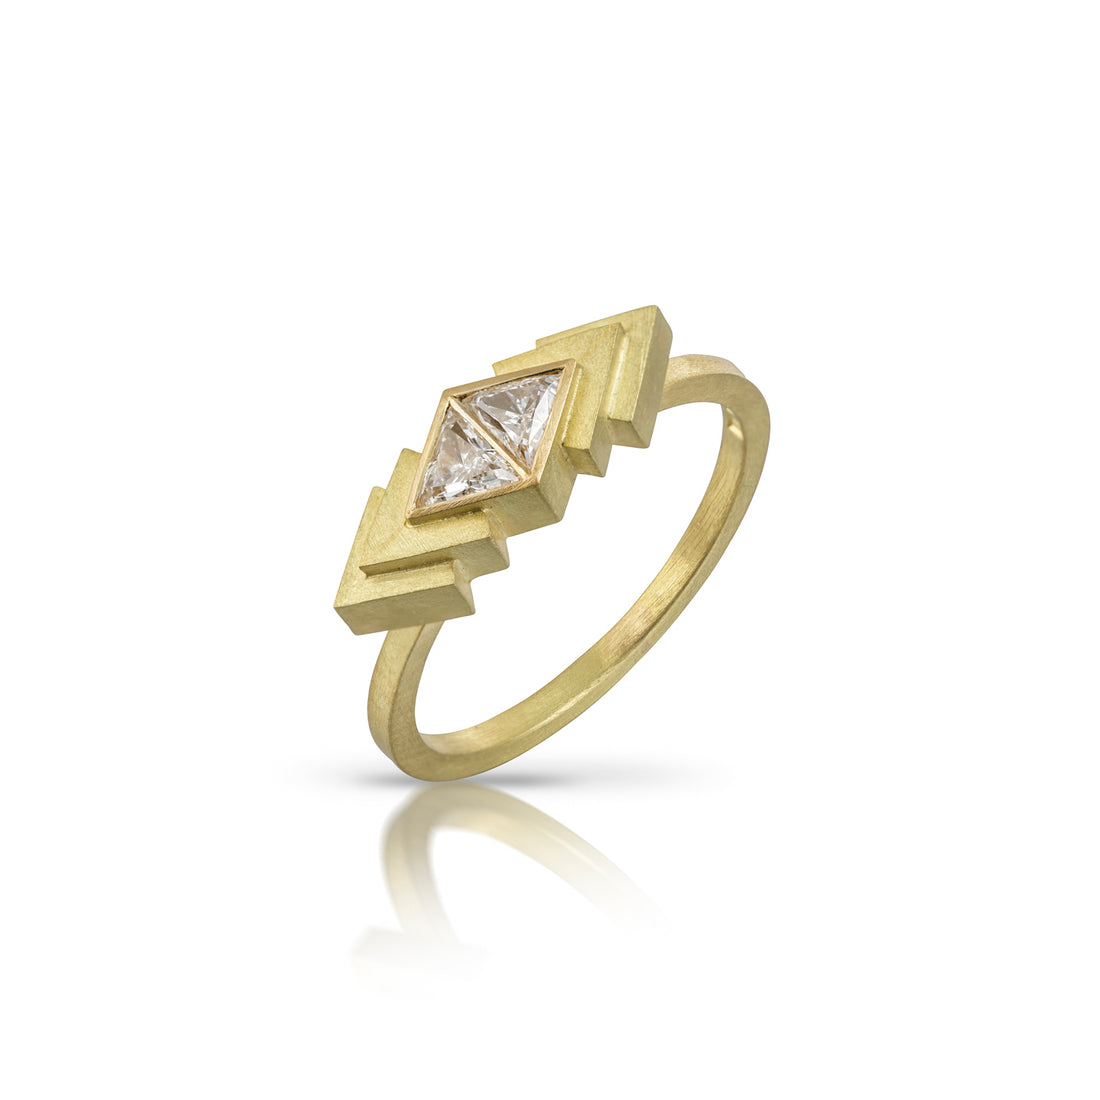  Trillion Cut Diamond Pichola Ring by Shivani Chorwadia | The Cut London